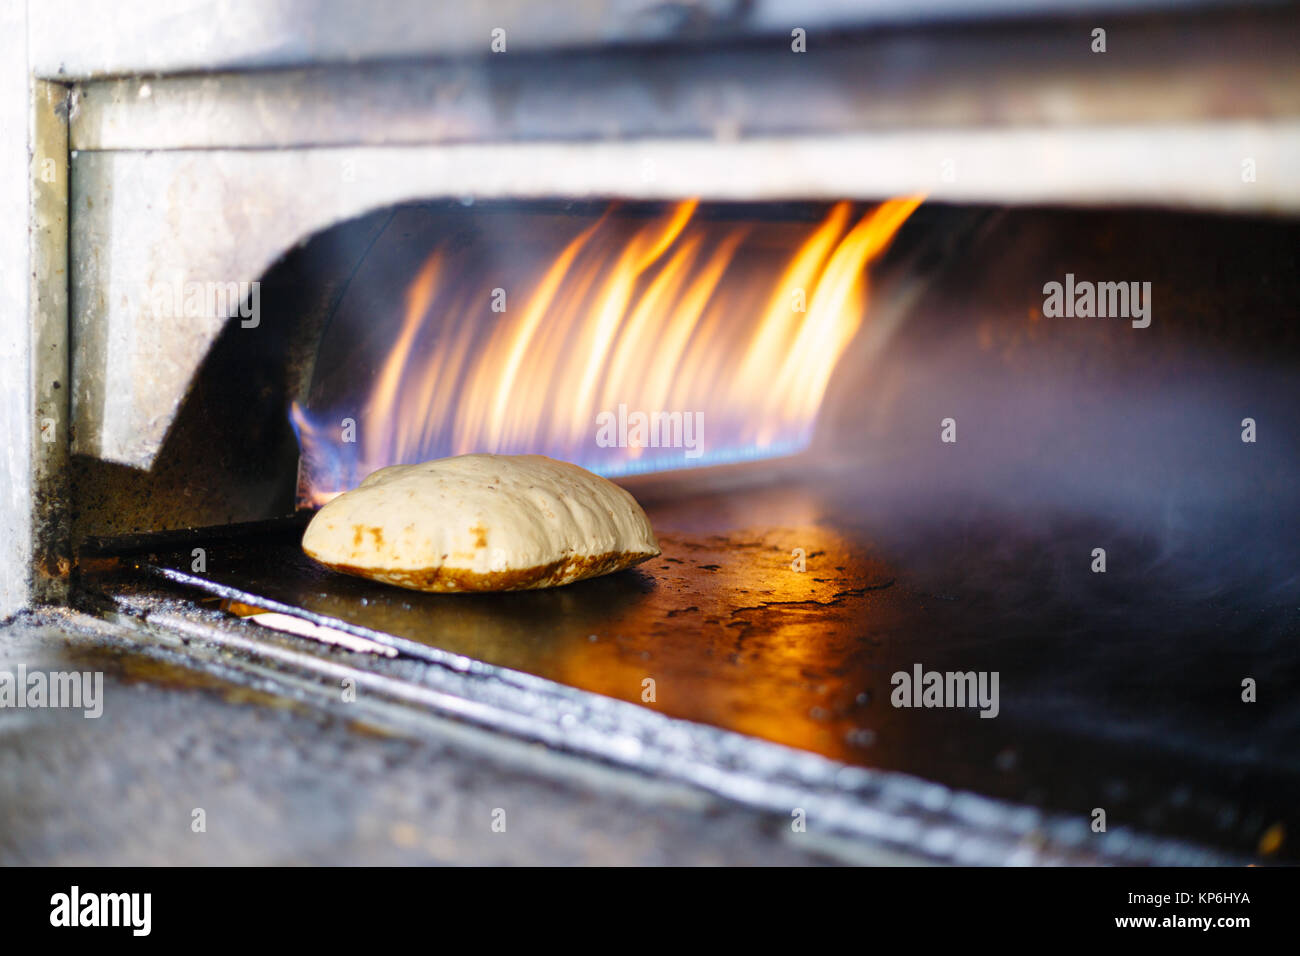 Pita Brot im Ofen Stockfotografie - Alamy